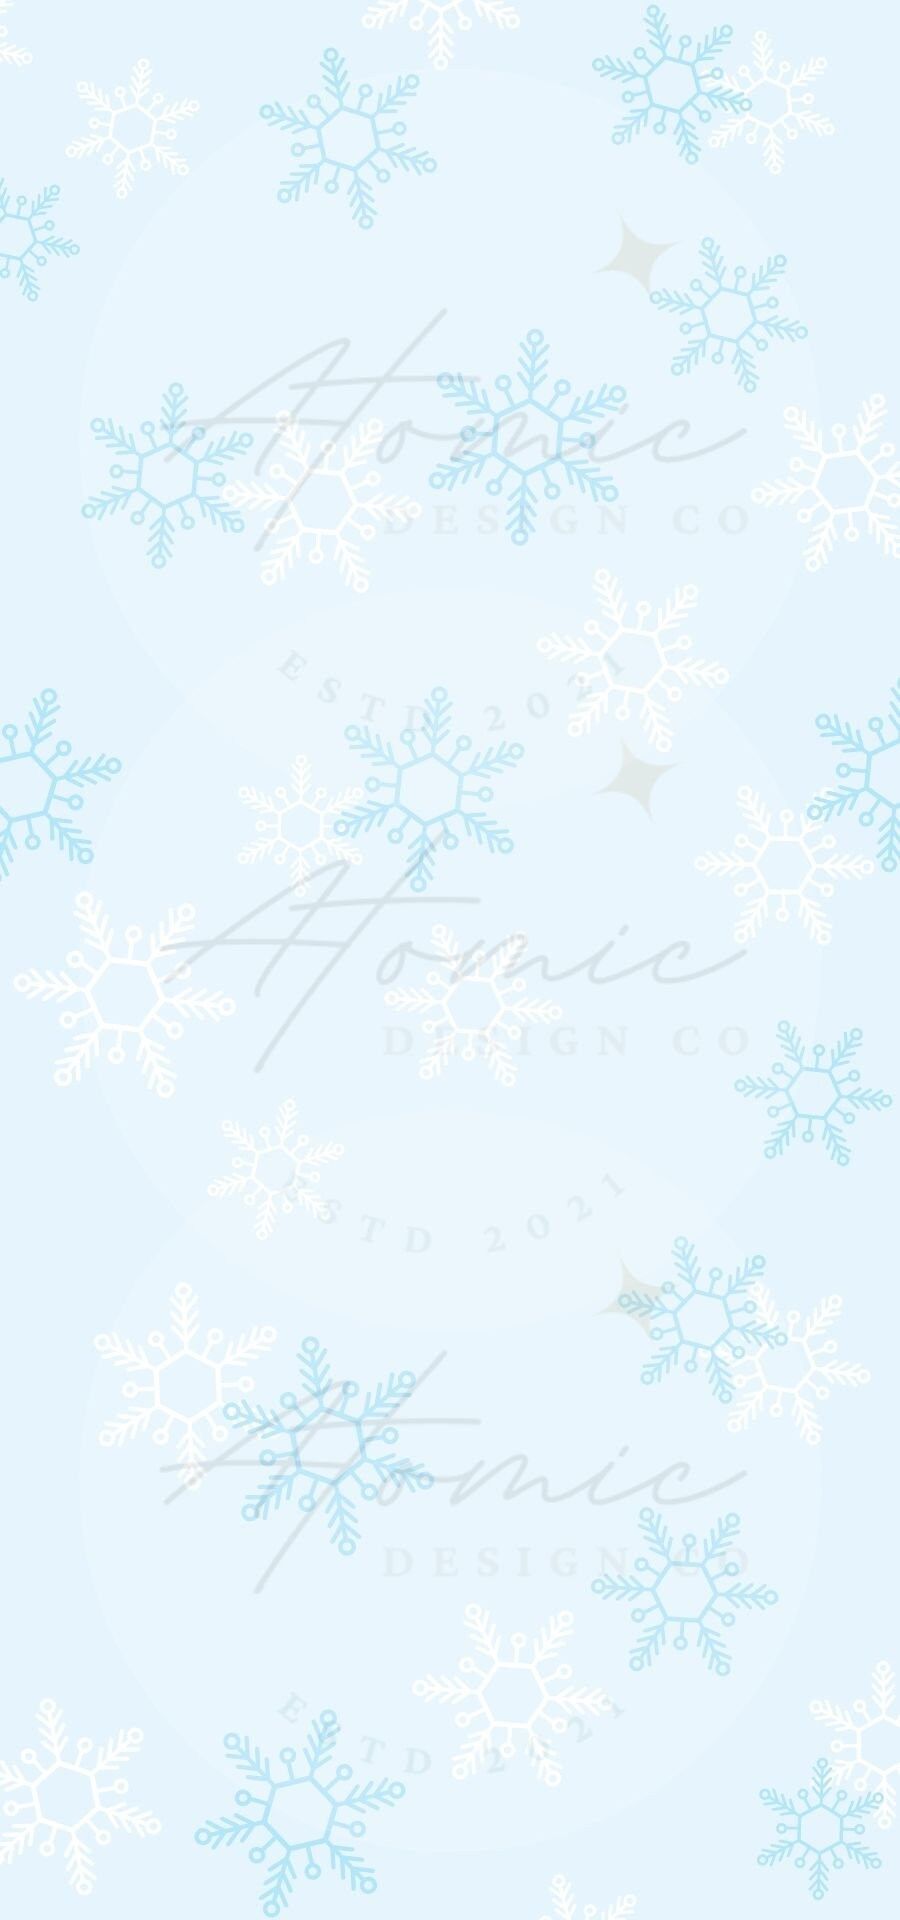 A blue and white snowflake pattern - Snowflake